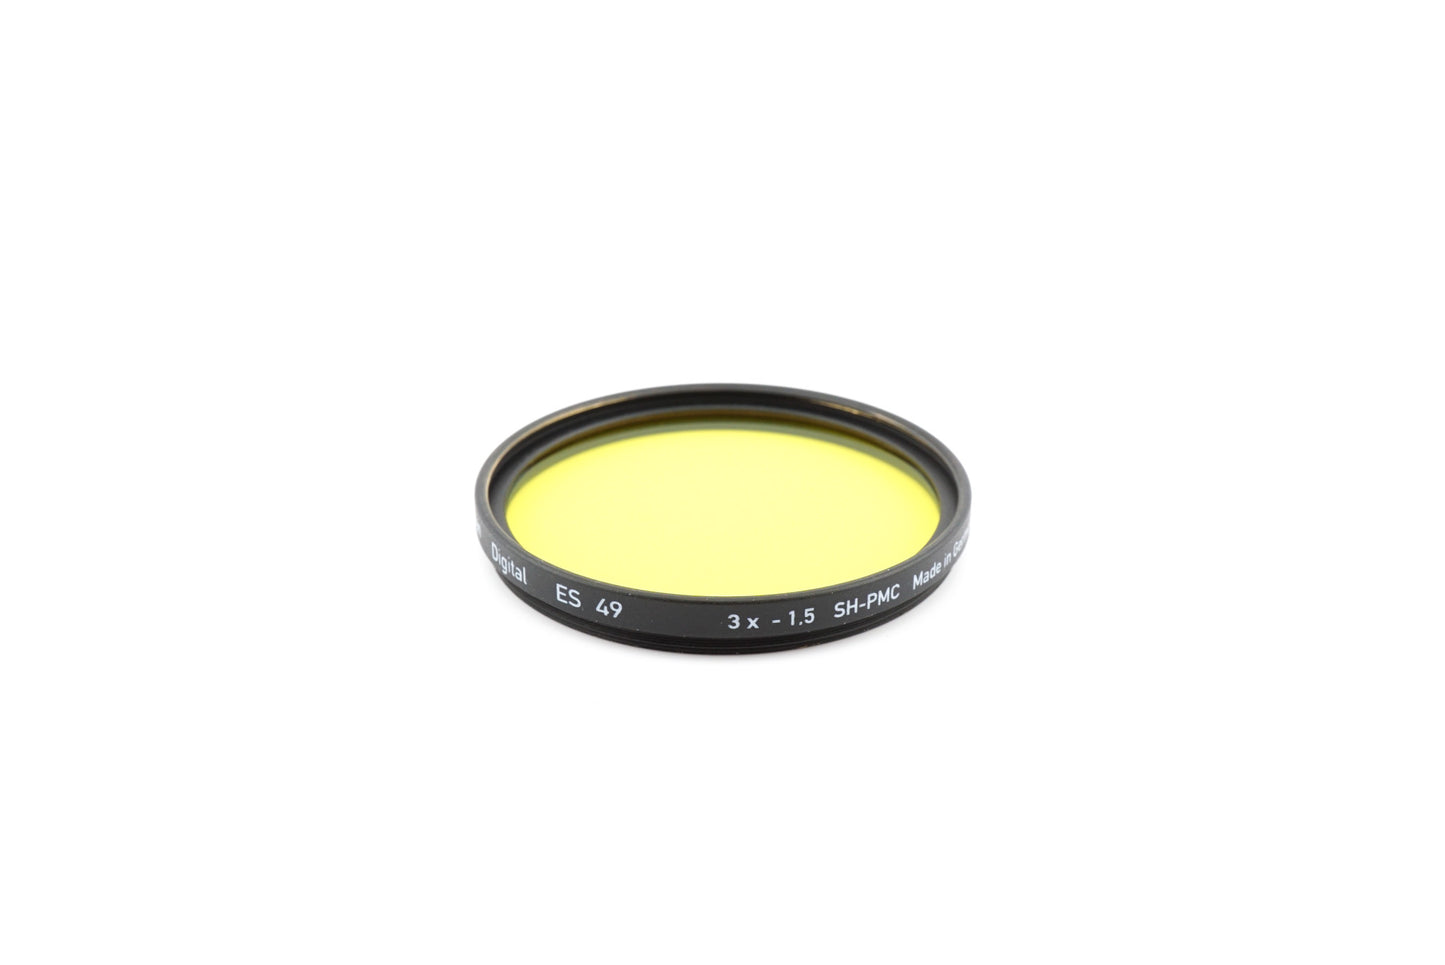 Heliopan 49mm Yellow 8 Filter 3x -1,5 SH-PMC Digital ES49 - Accessory